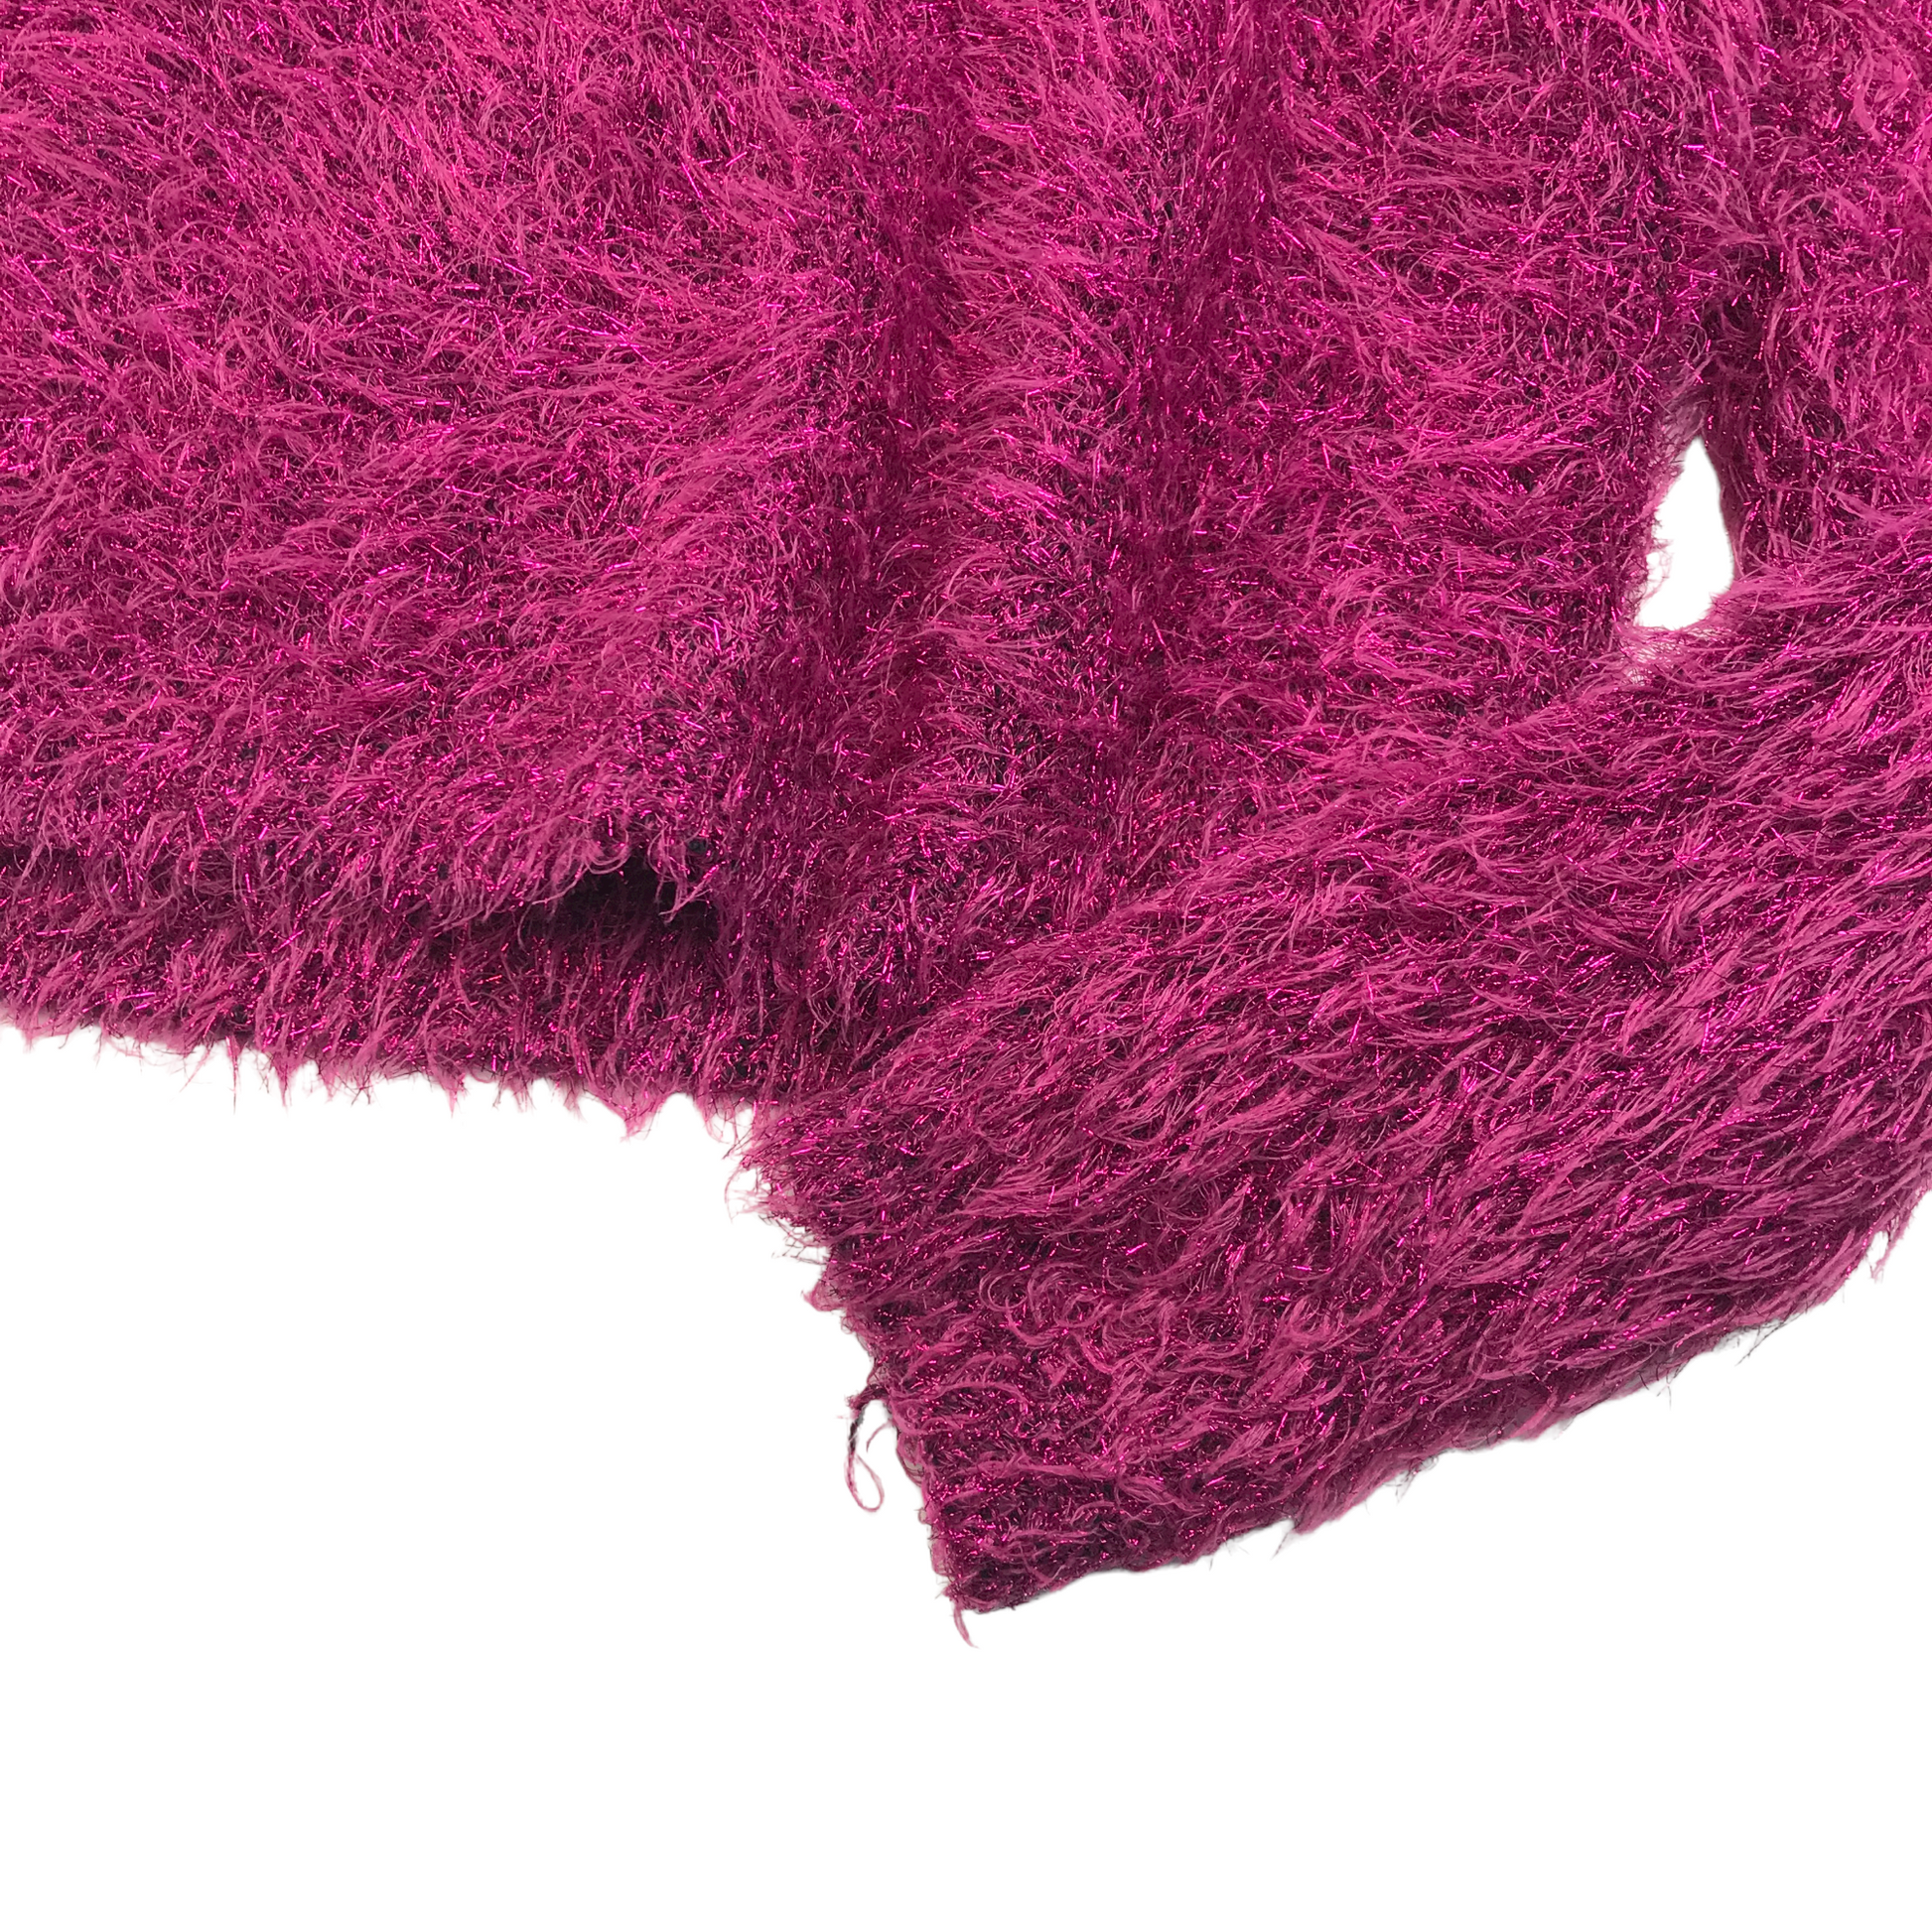 Primark Womens Pink Polyester Cropped Tank Size 10 Round Neck Pullover –  Preworn Ltd